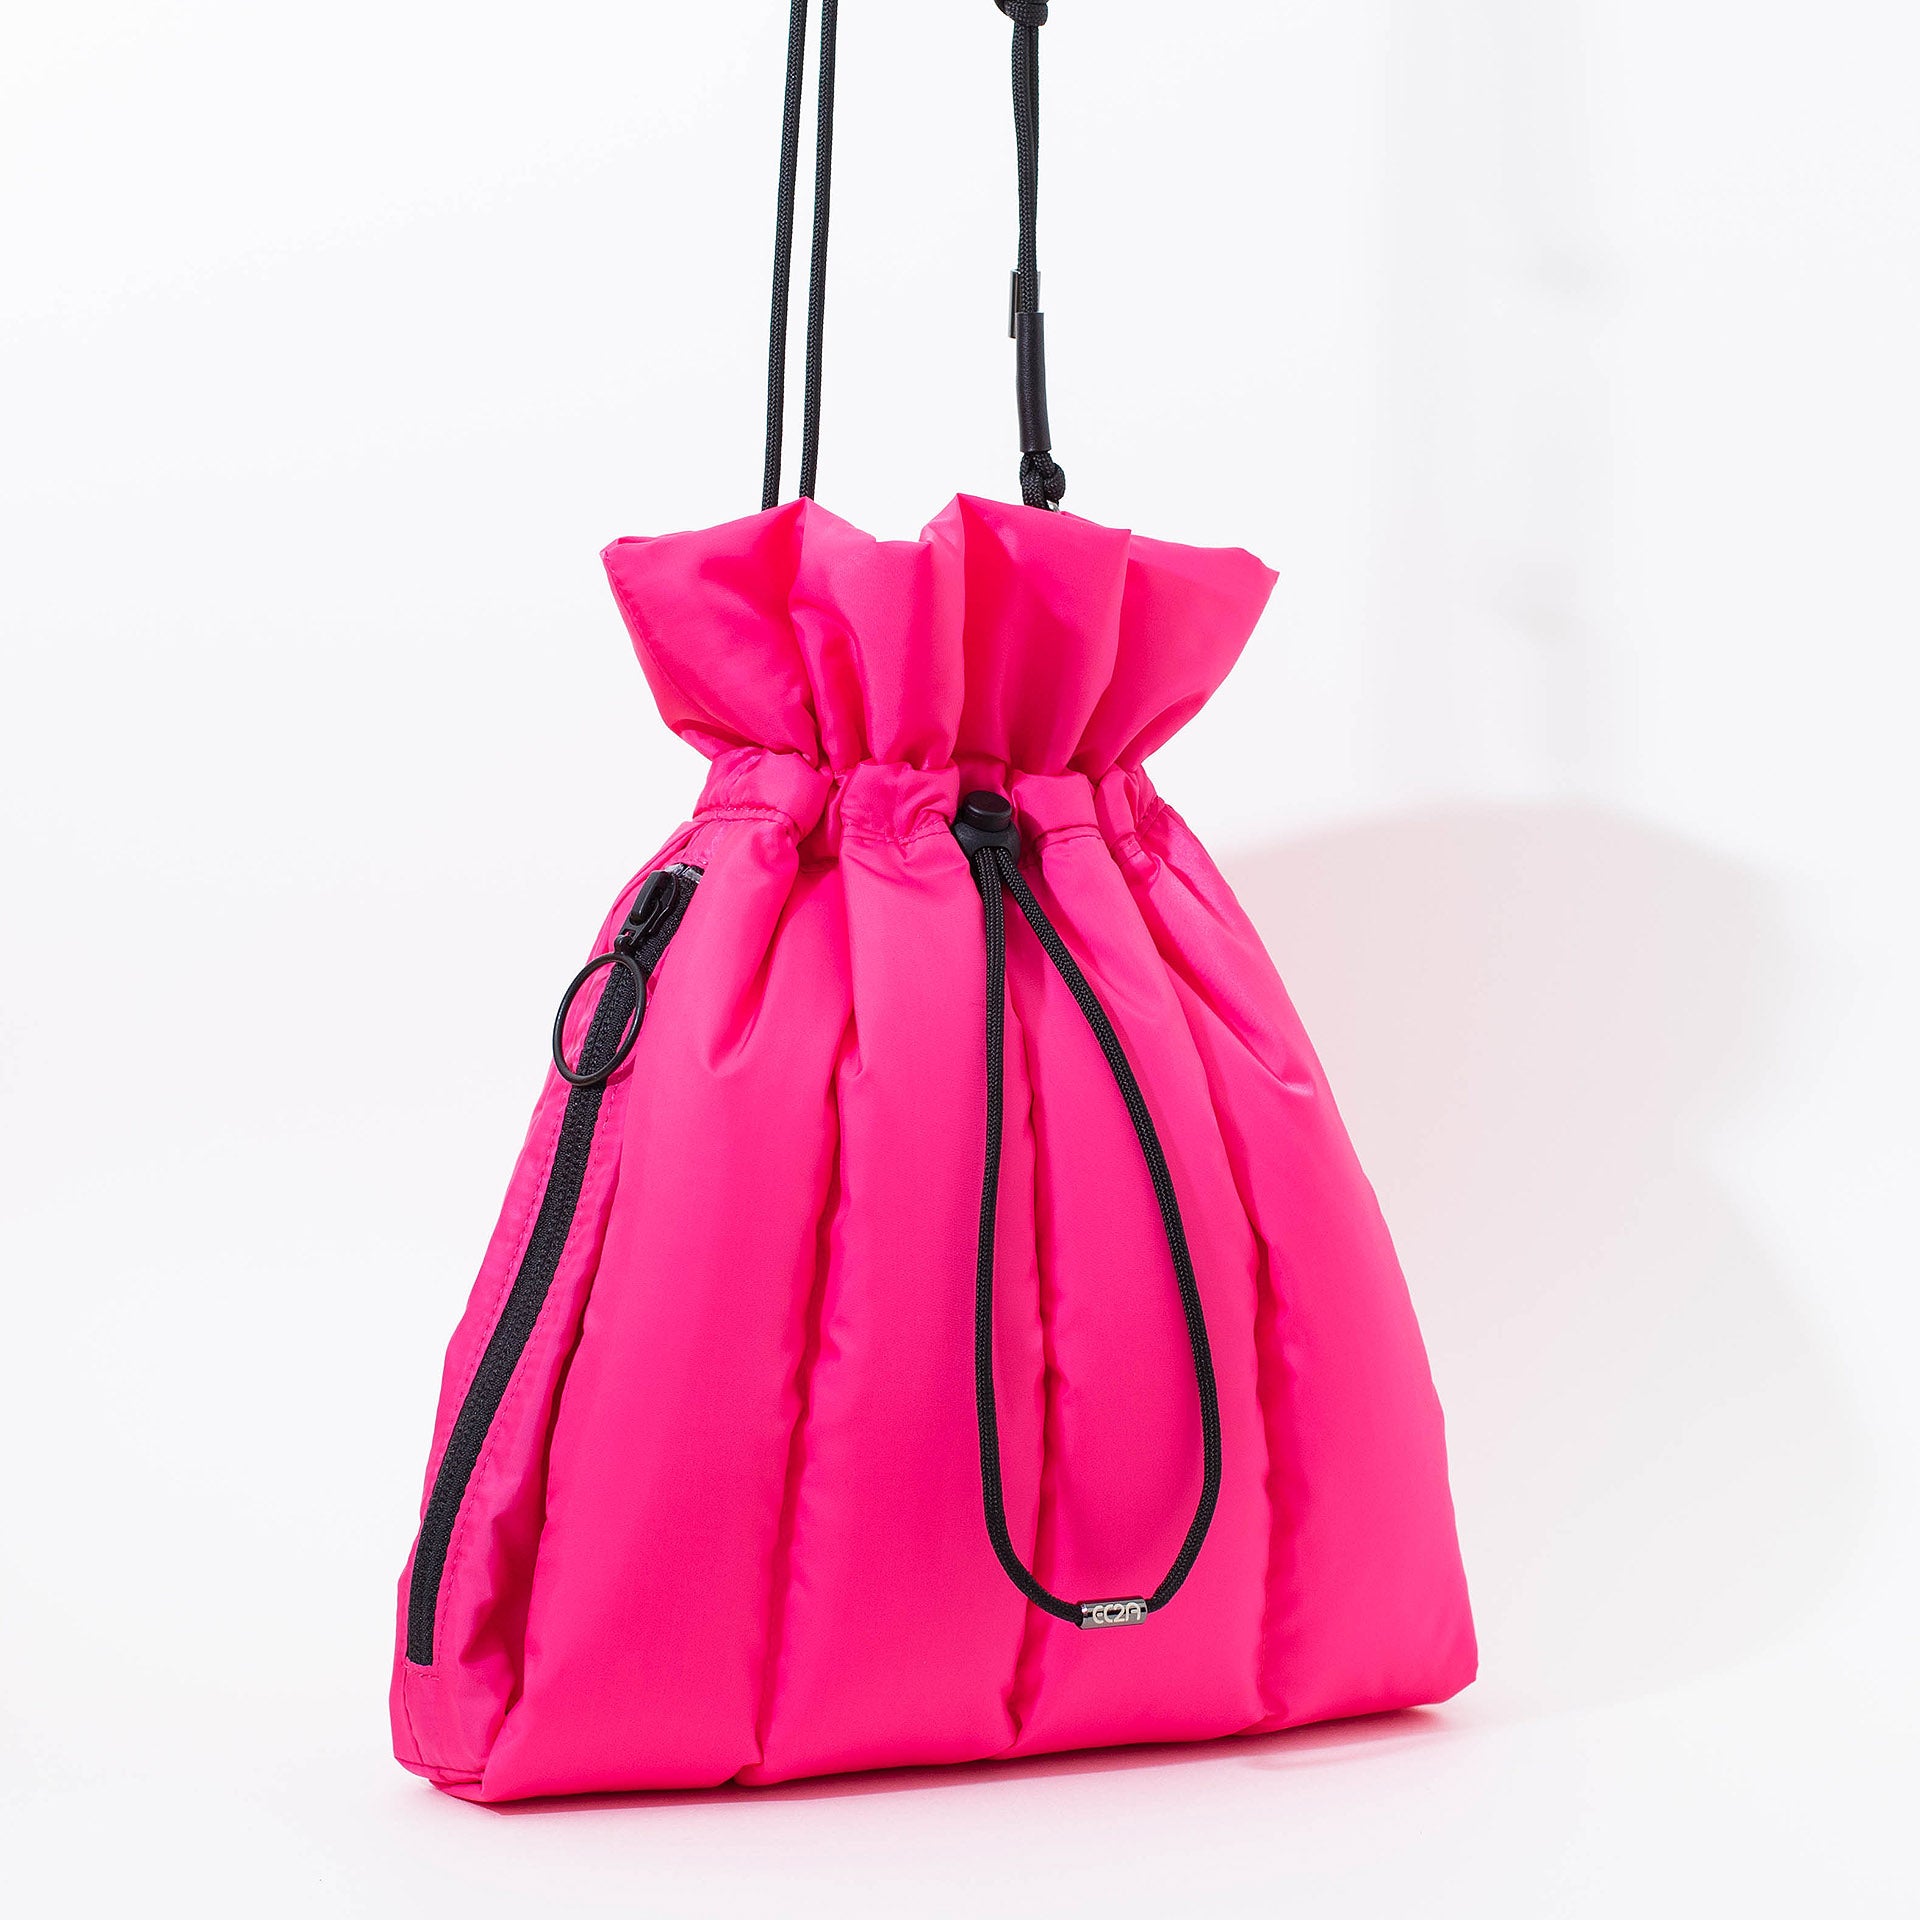 EC2A pink duck down puffer drawstring handbag, quarter side view